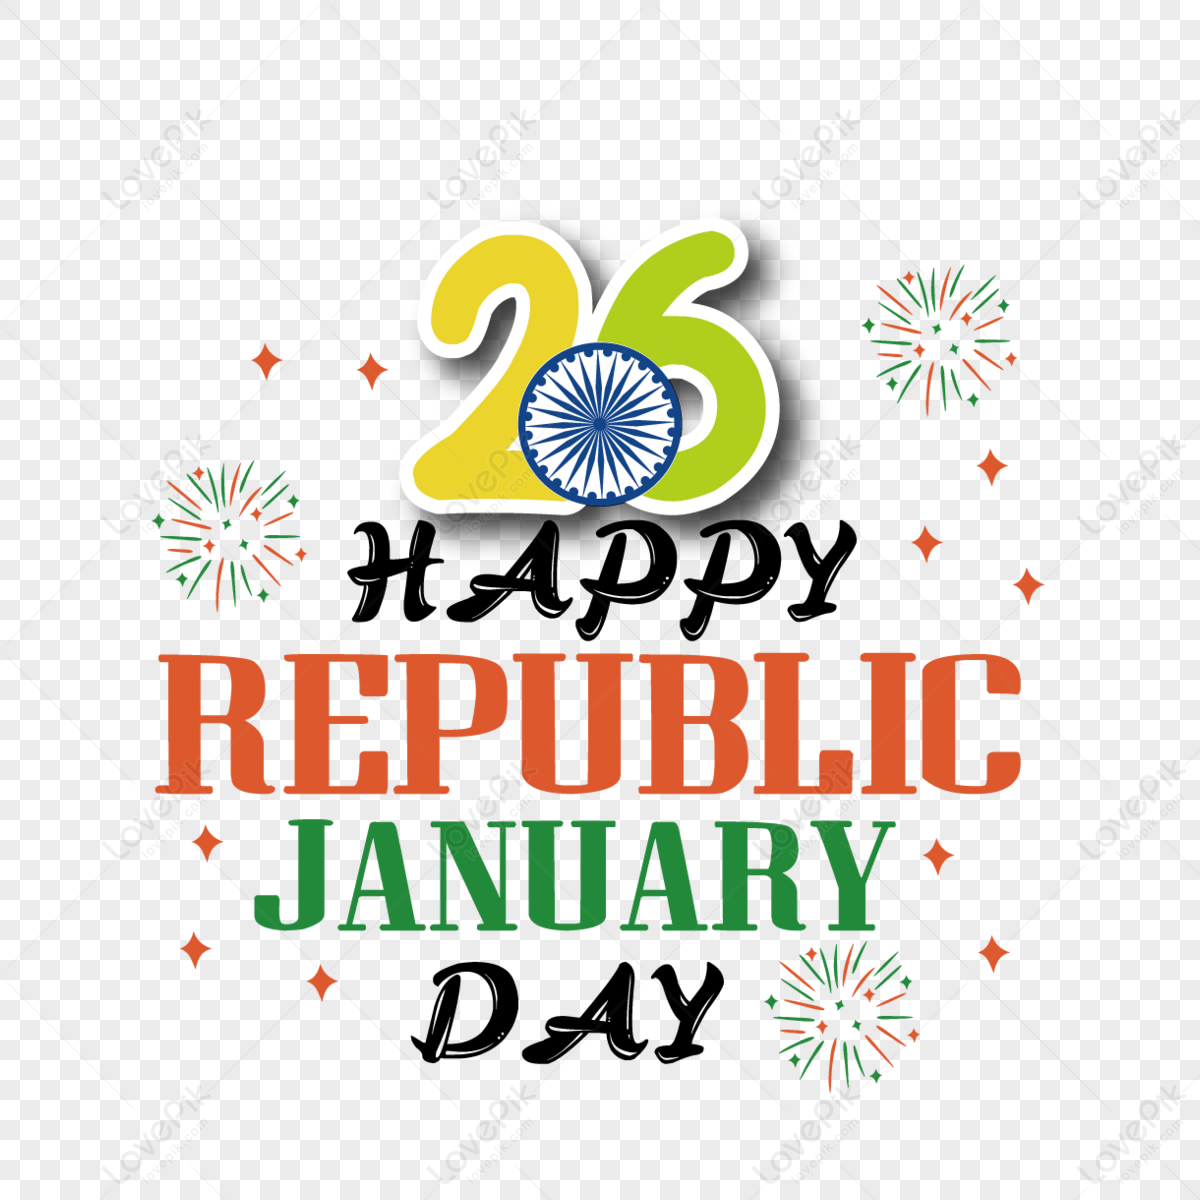 Happy Republic Day SVG Graphic by ss graphic studio · Creative Fabrica